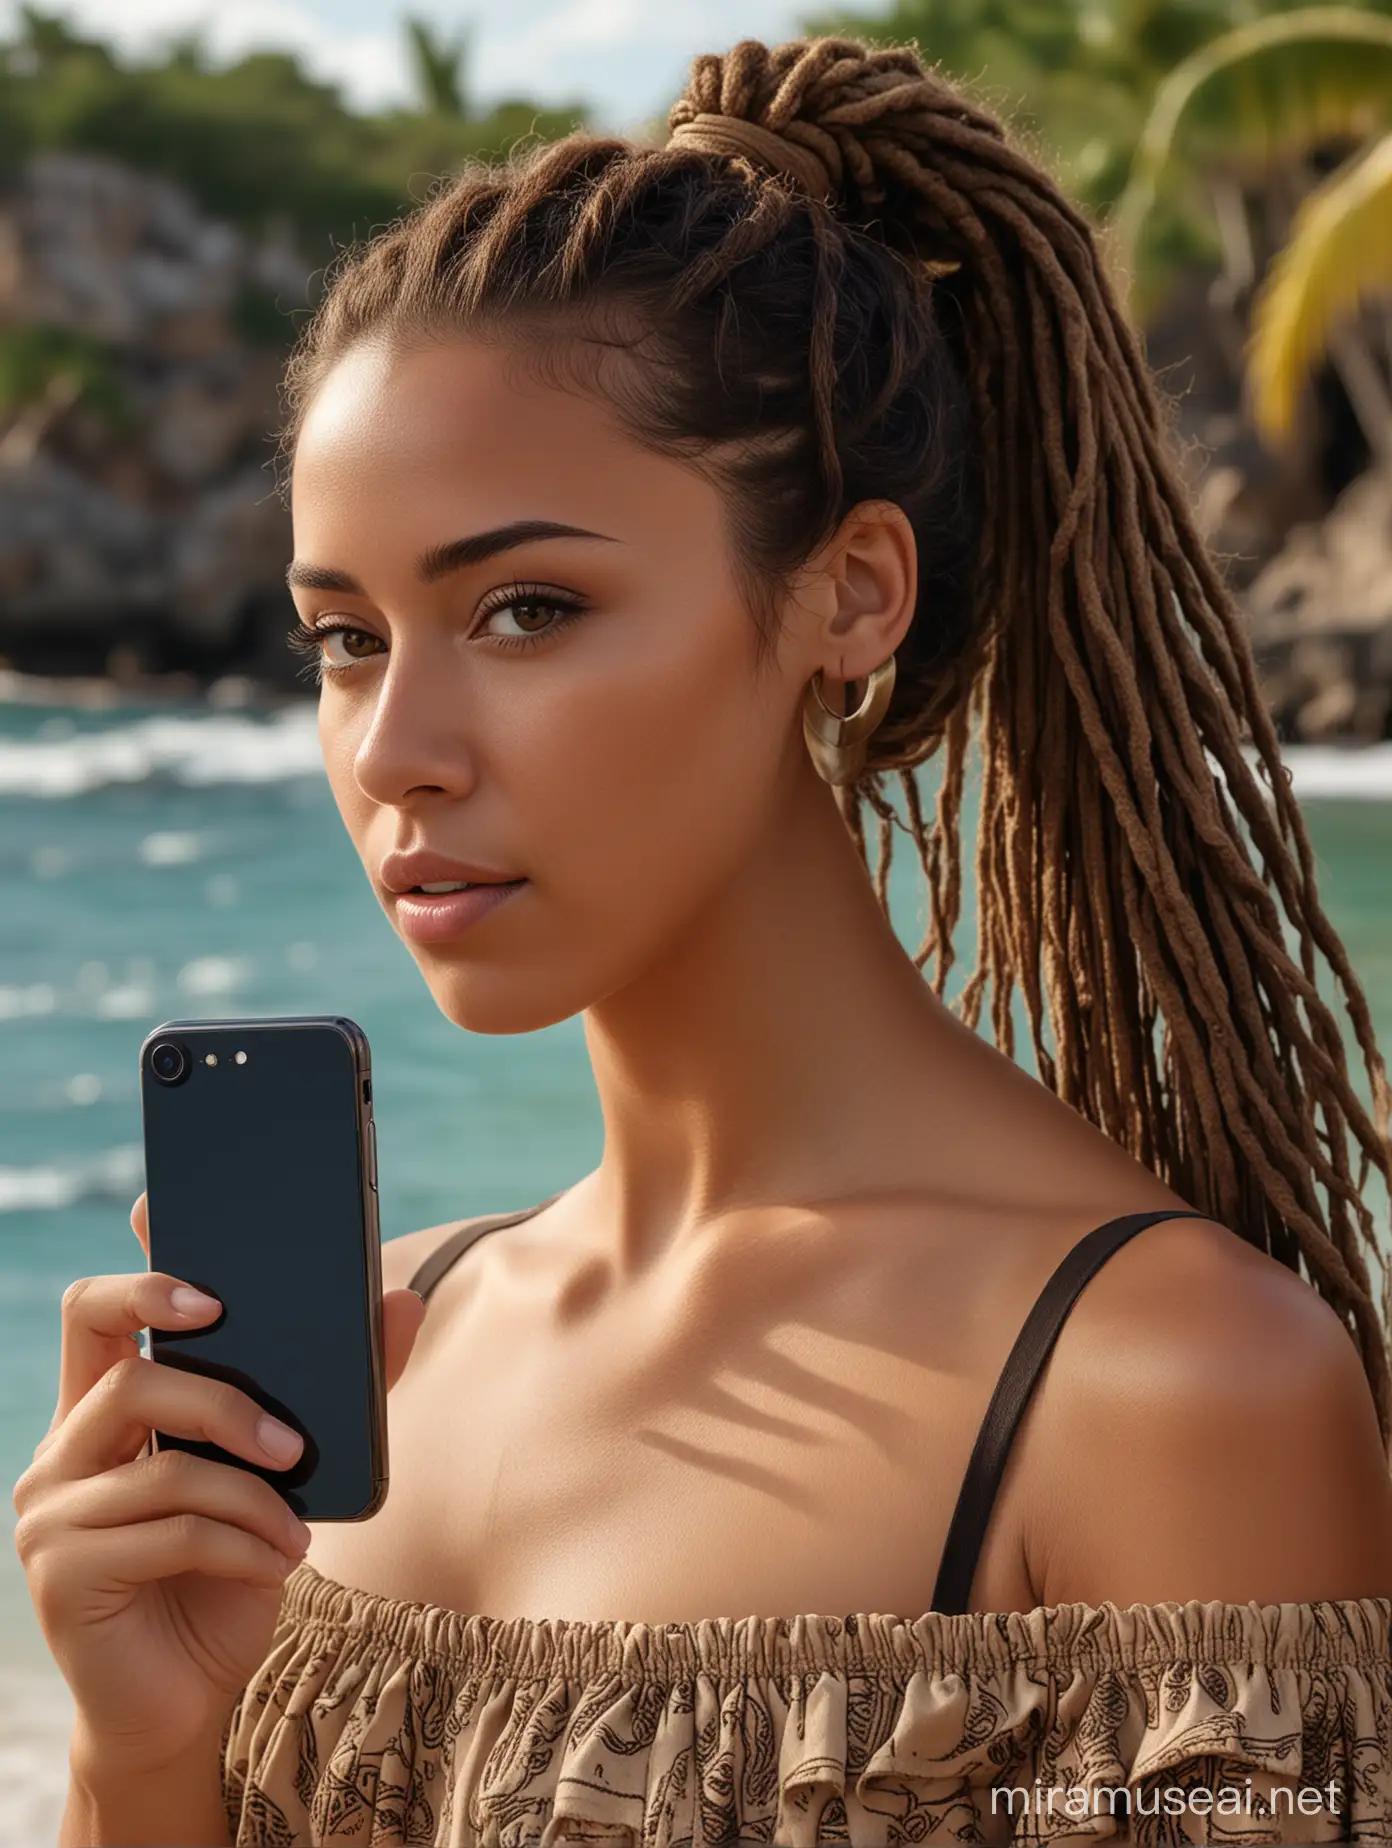 Stylish Caribbean Woman Captured in HighResolution Smartphone Portrait